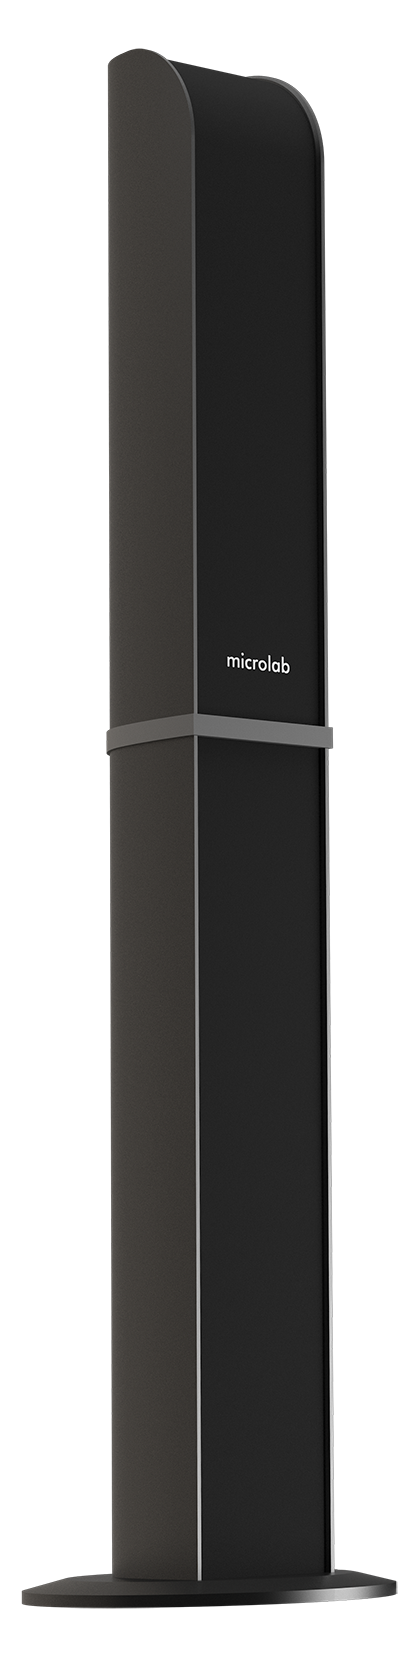 Speaker - Microlab LXi 6325b